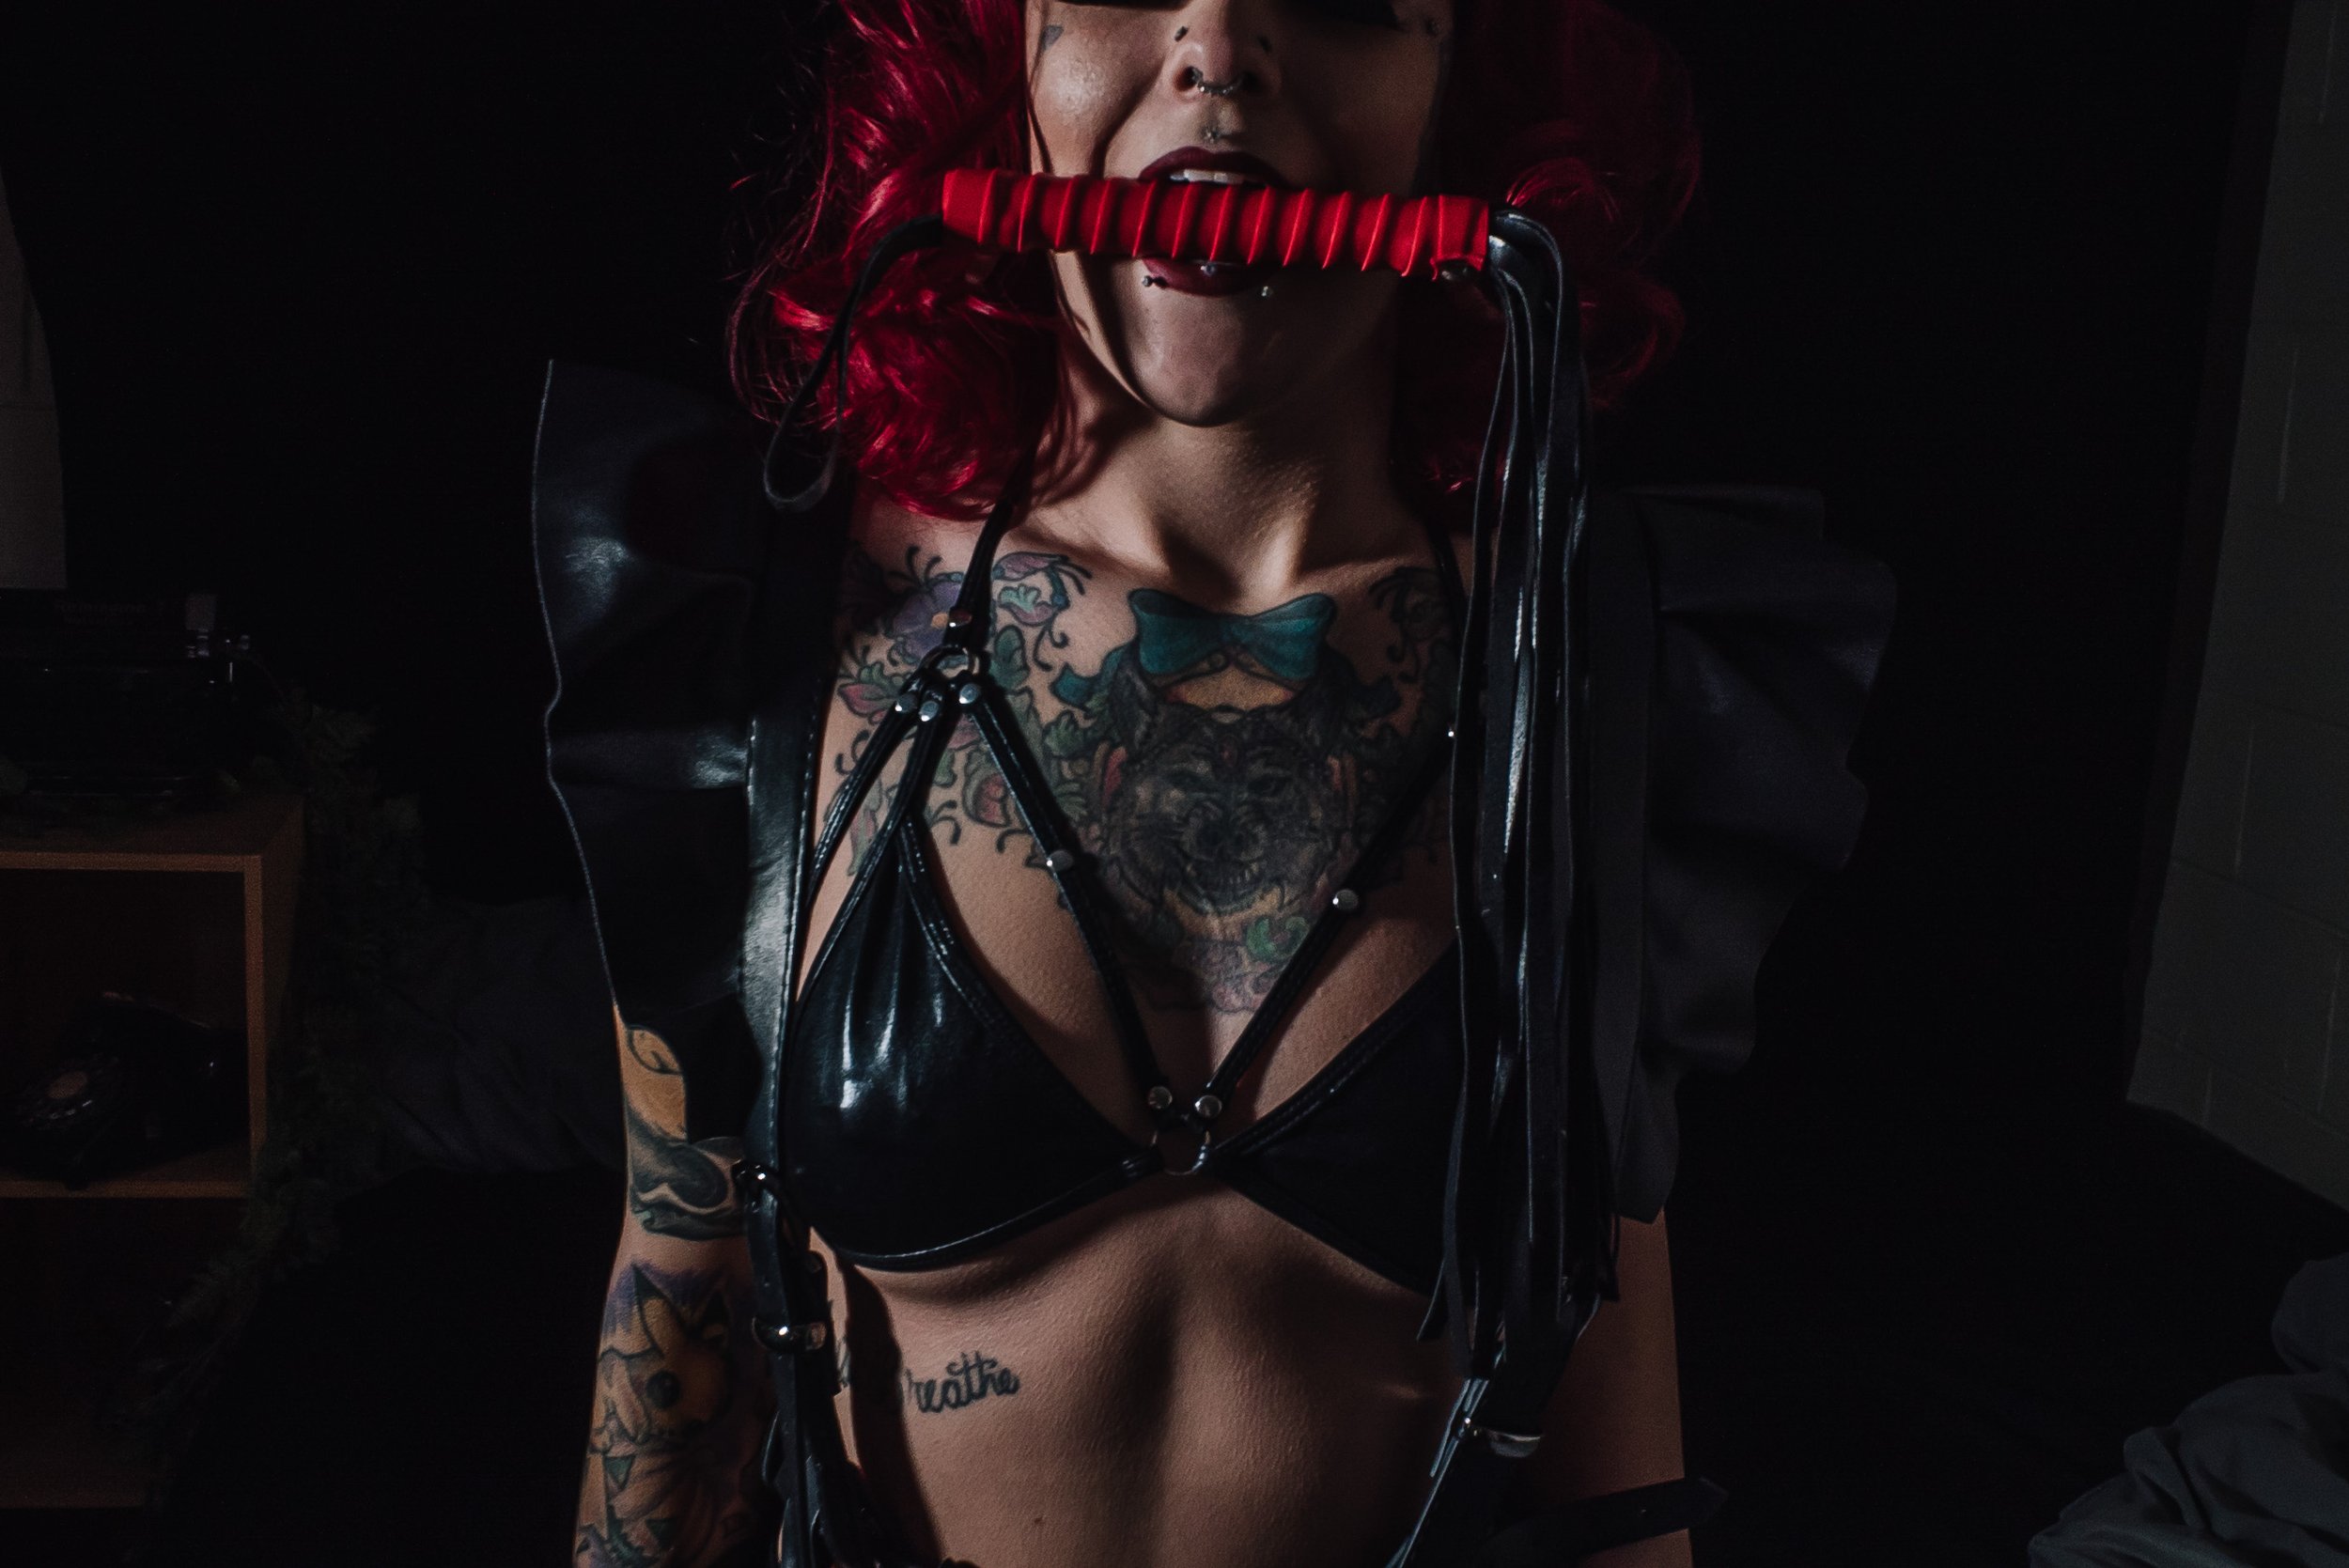 Sex — North Carolina Boudoir and Erotica Body positive photographer Blog — The Boudoir Studio photo